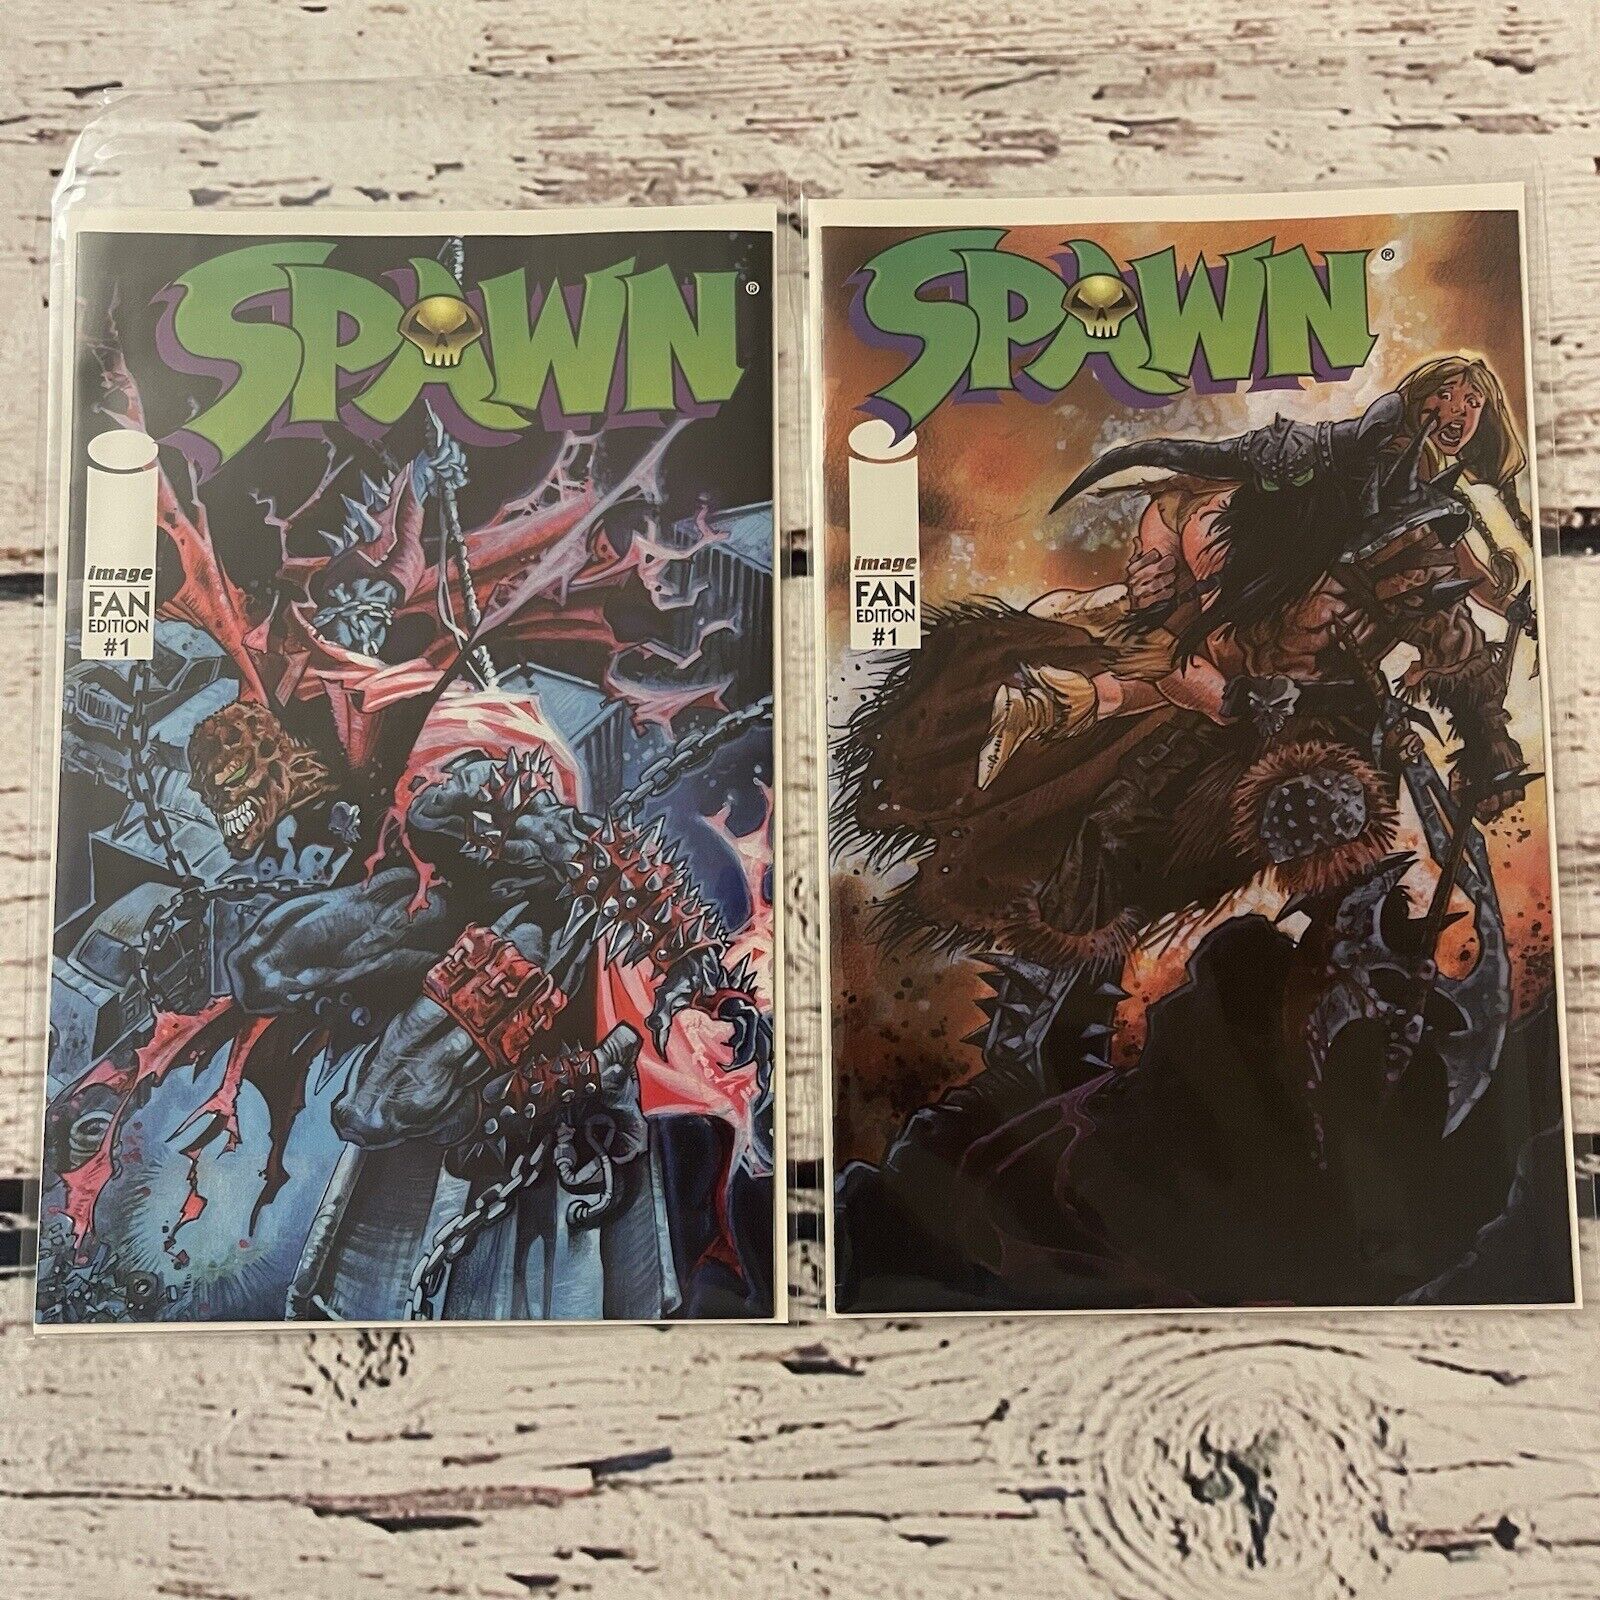 Spawn #1 Fan Edition (Image Comic, 1996) Lot Of 2 Rare